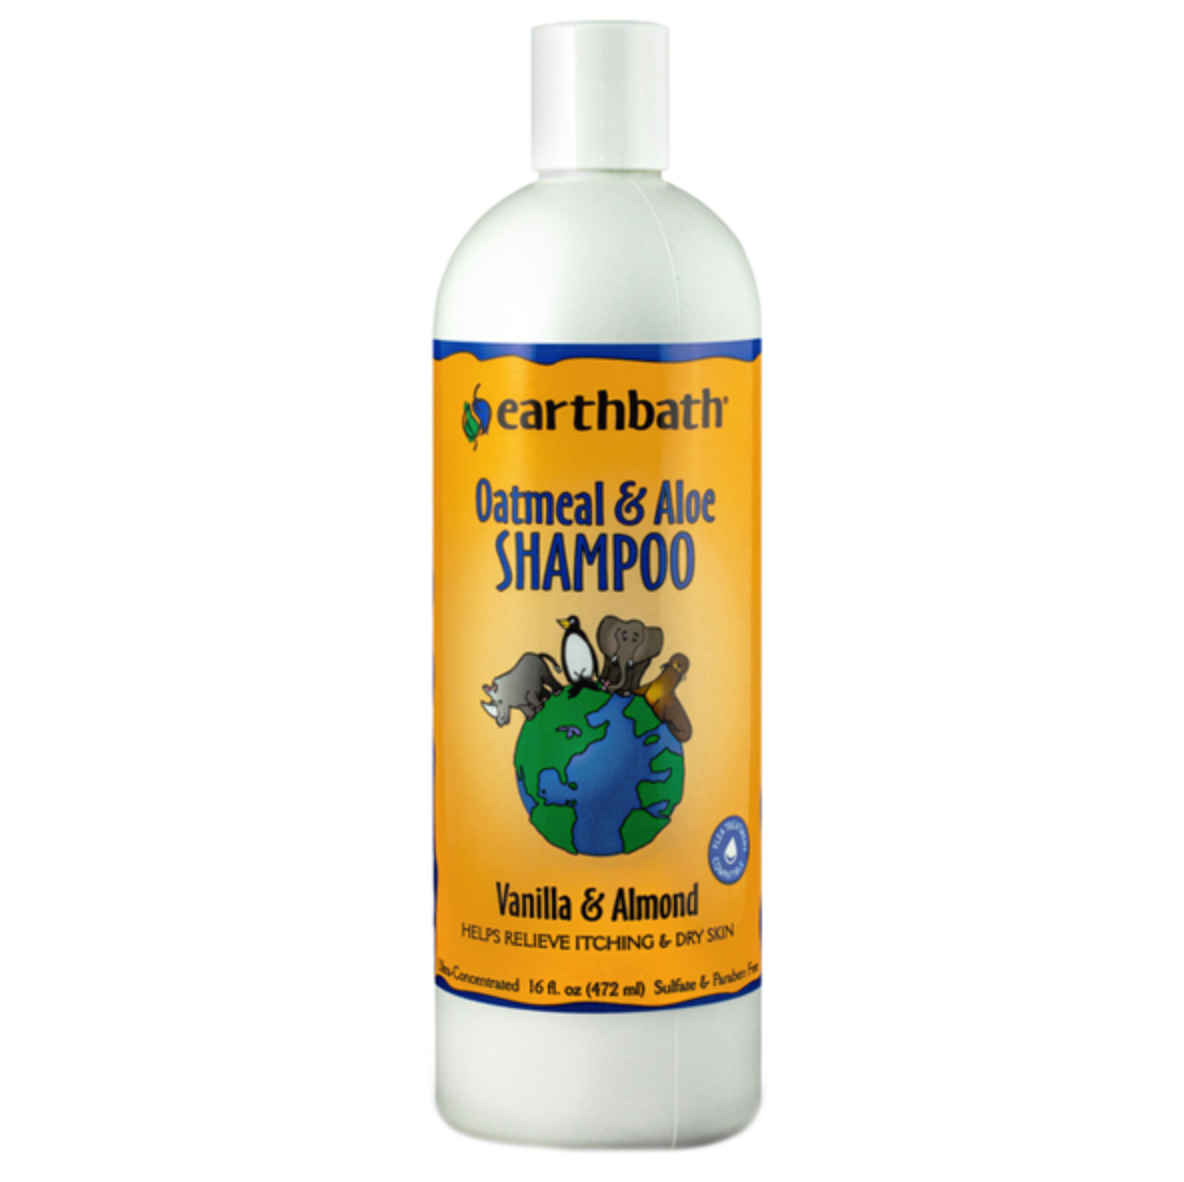 Earthbath Shampoo For Dogs, Oatmeal & Aloe